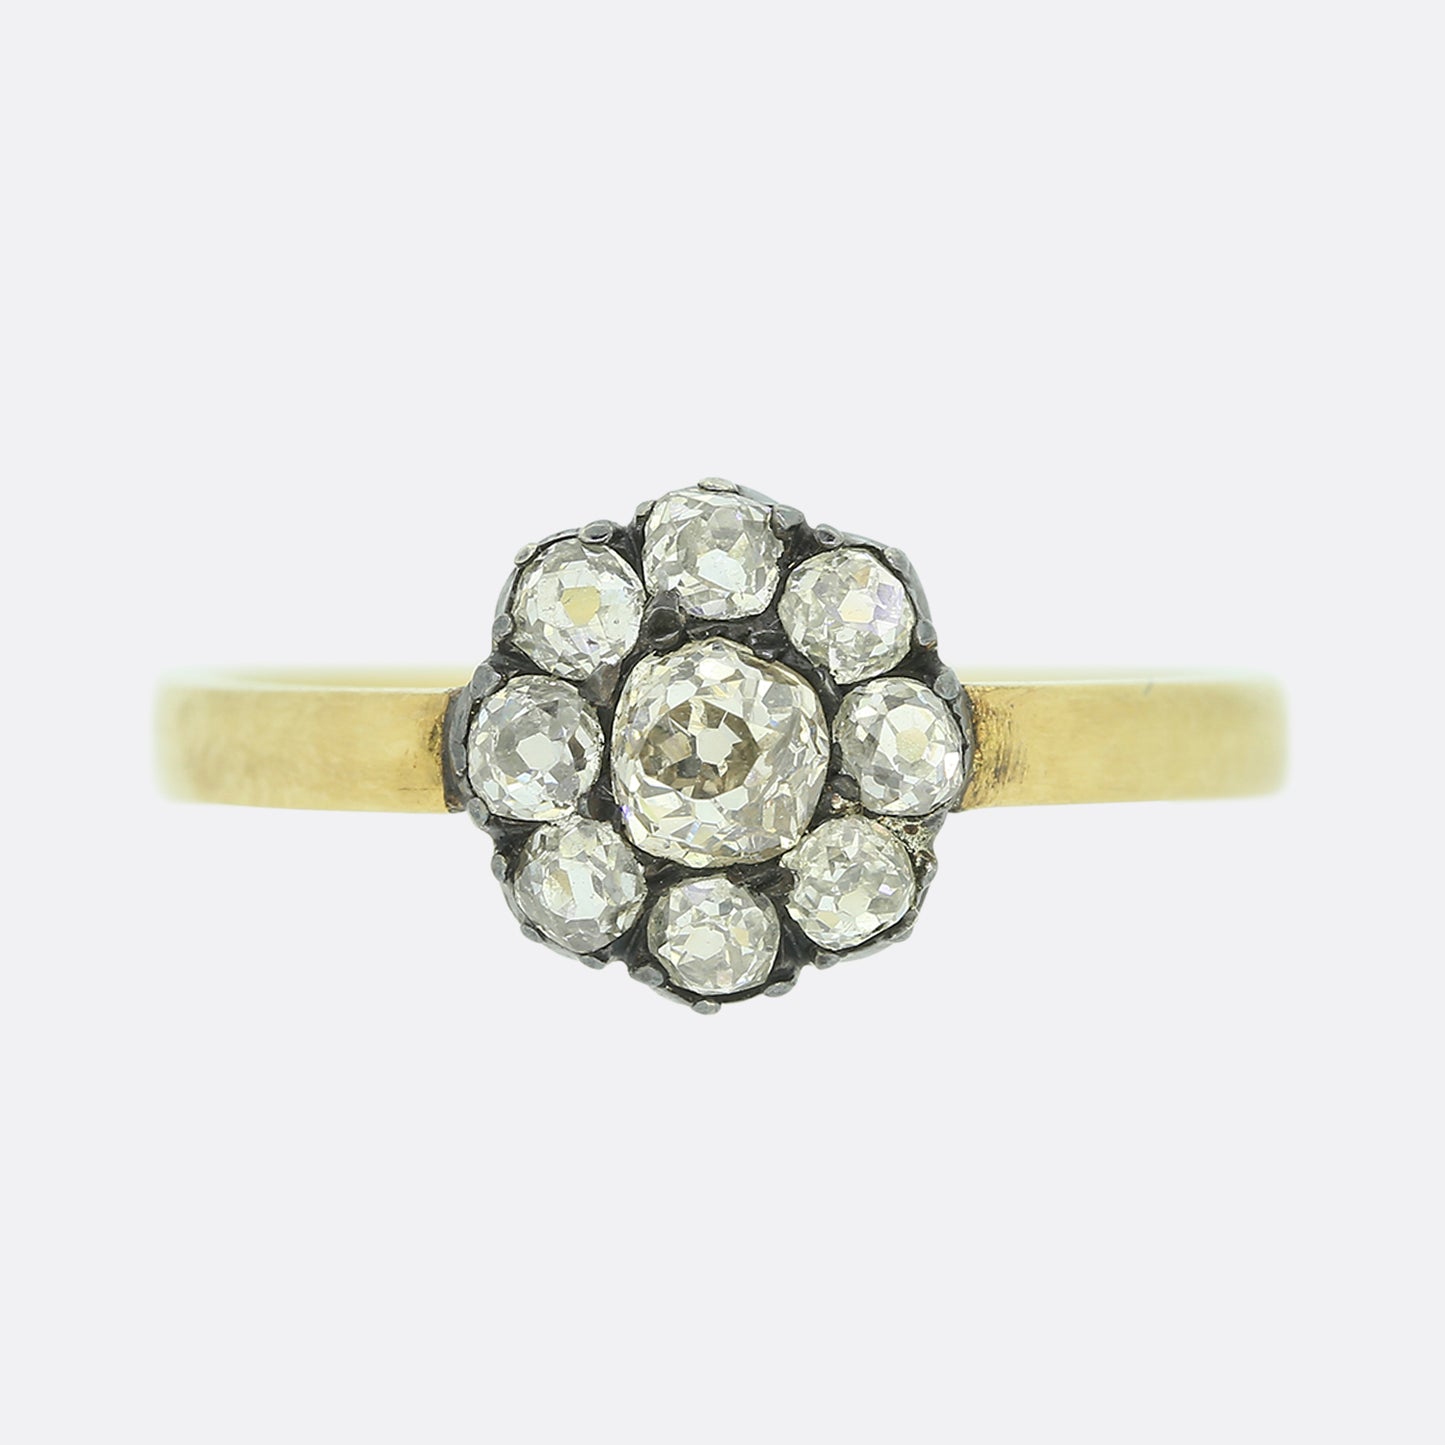 Victorian 0.52 Carat Old Cut Diamond Cluster Ring